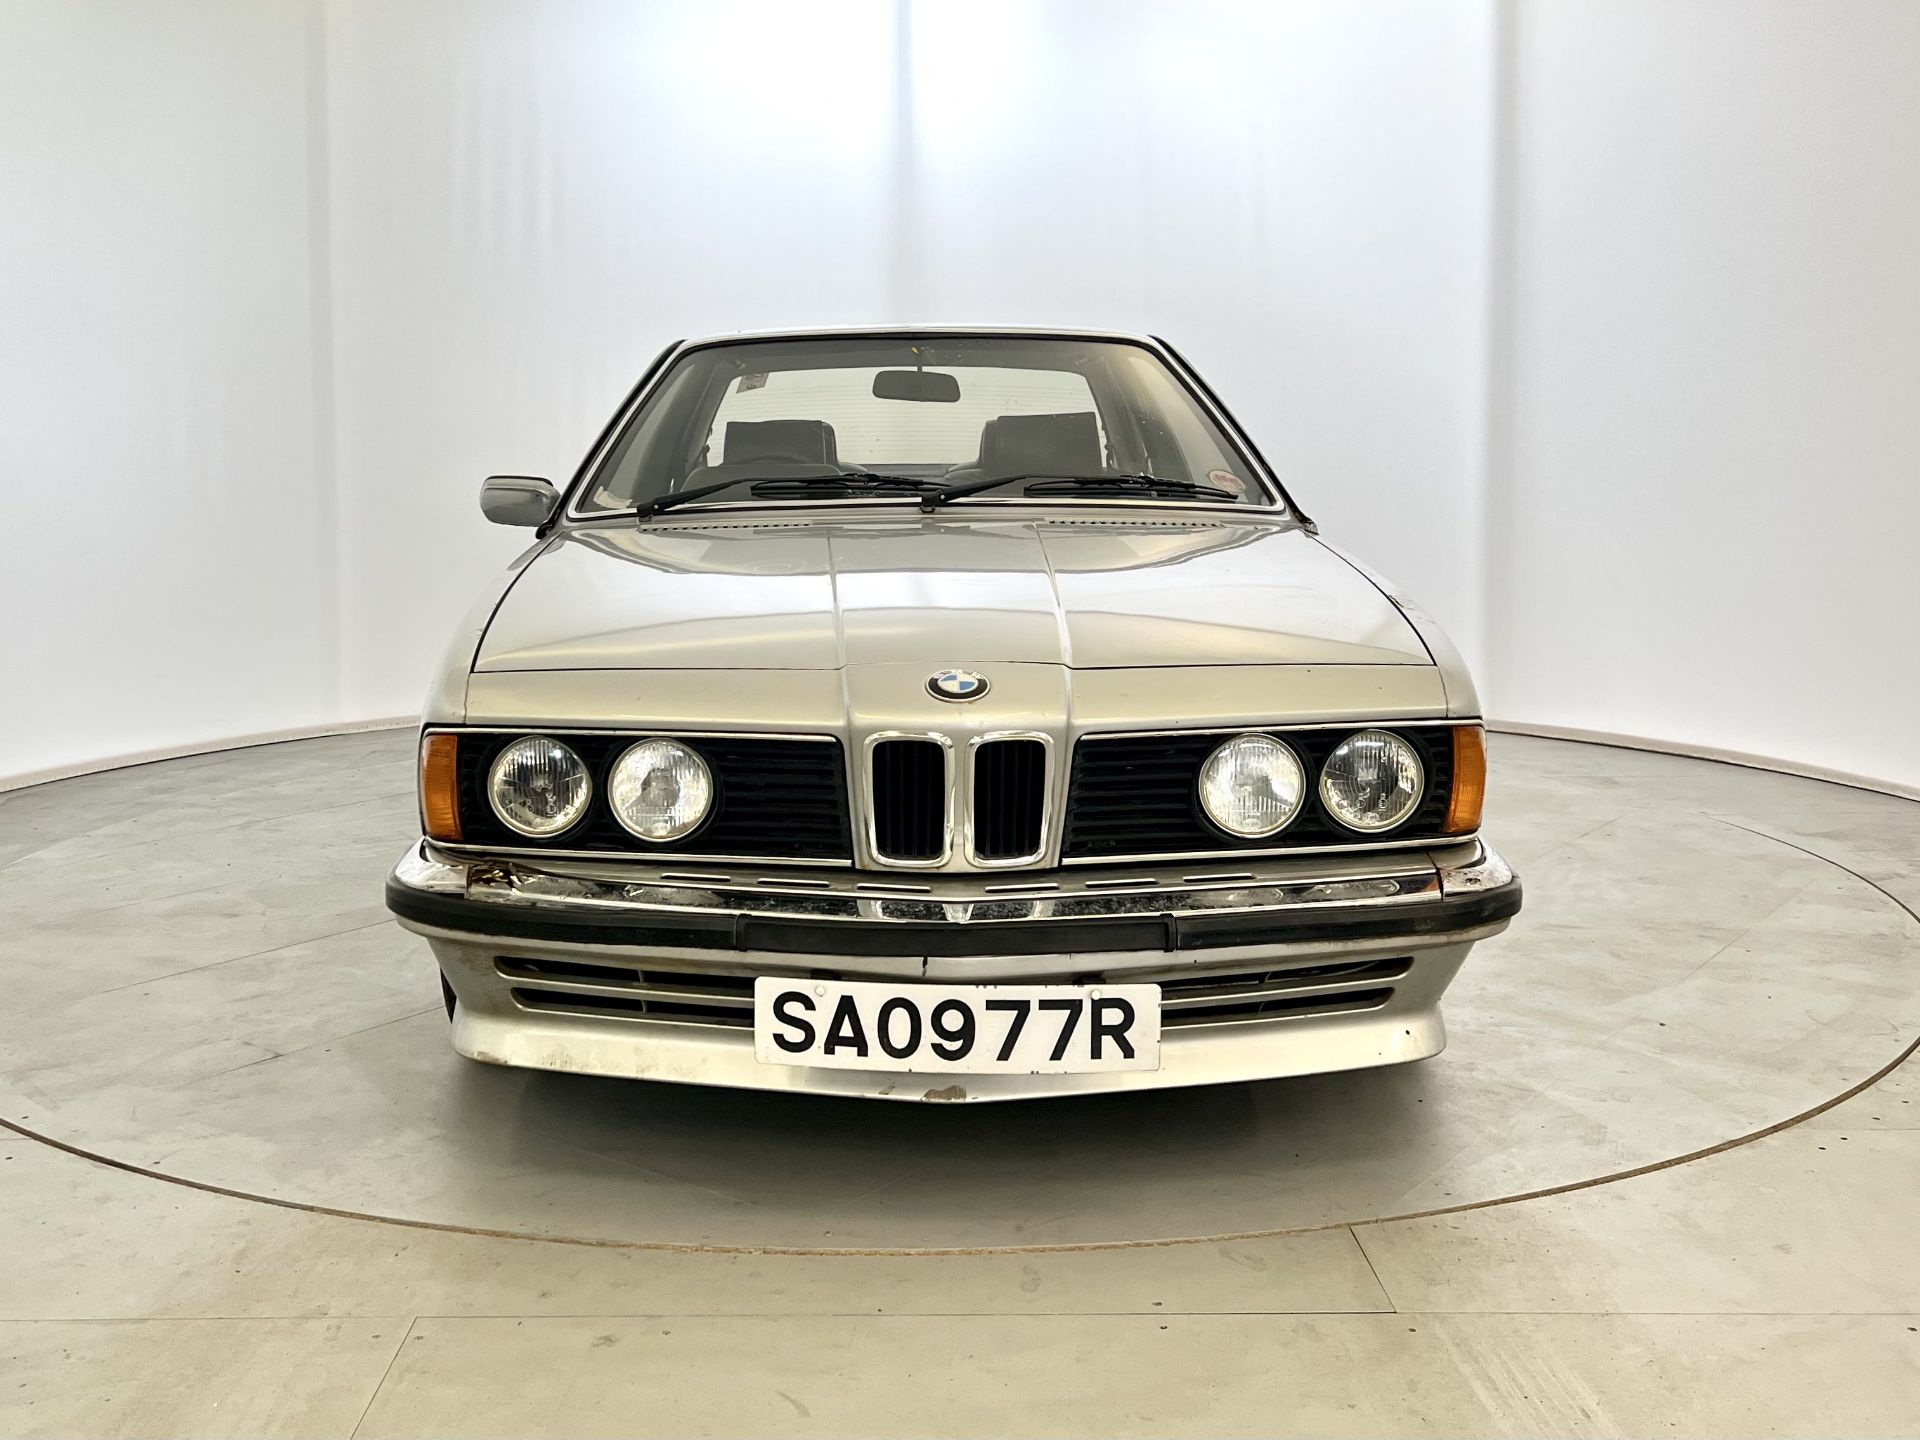 BMW 633 CSI - Image 2 of 30